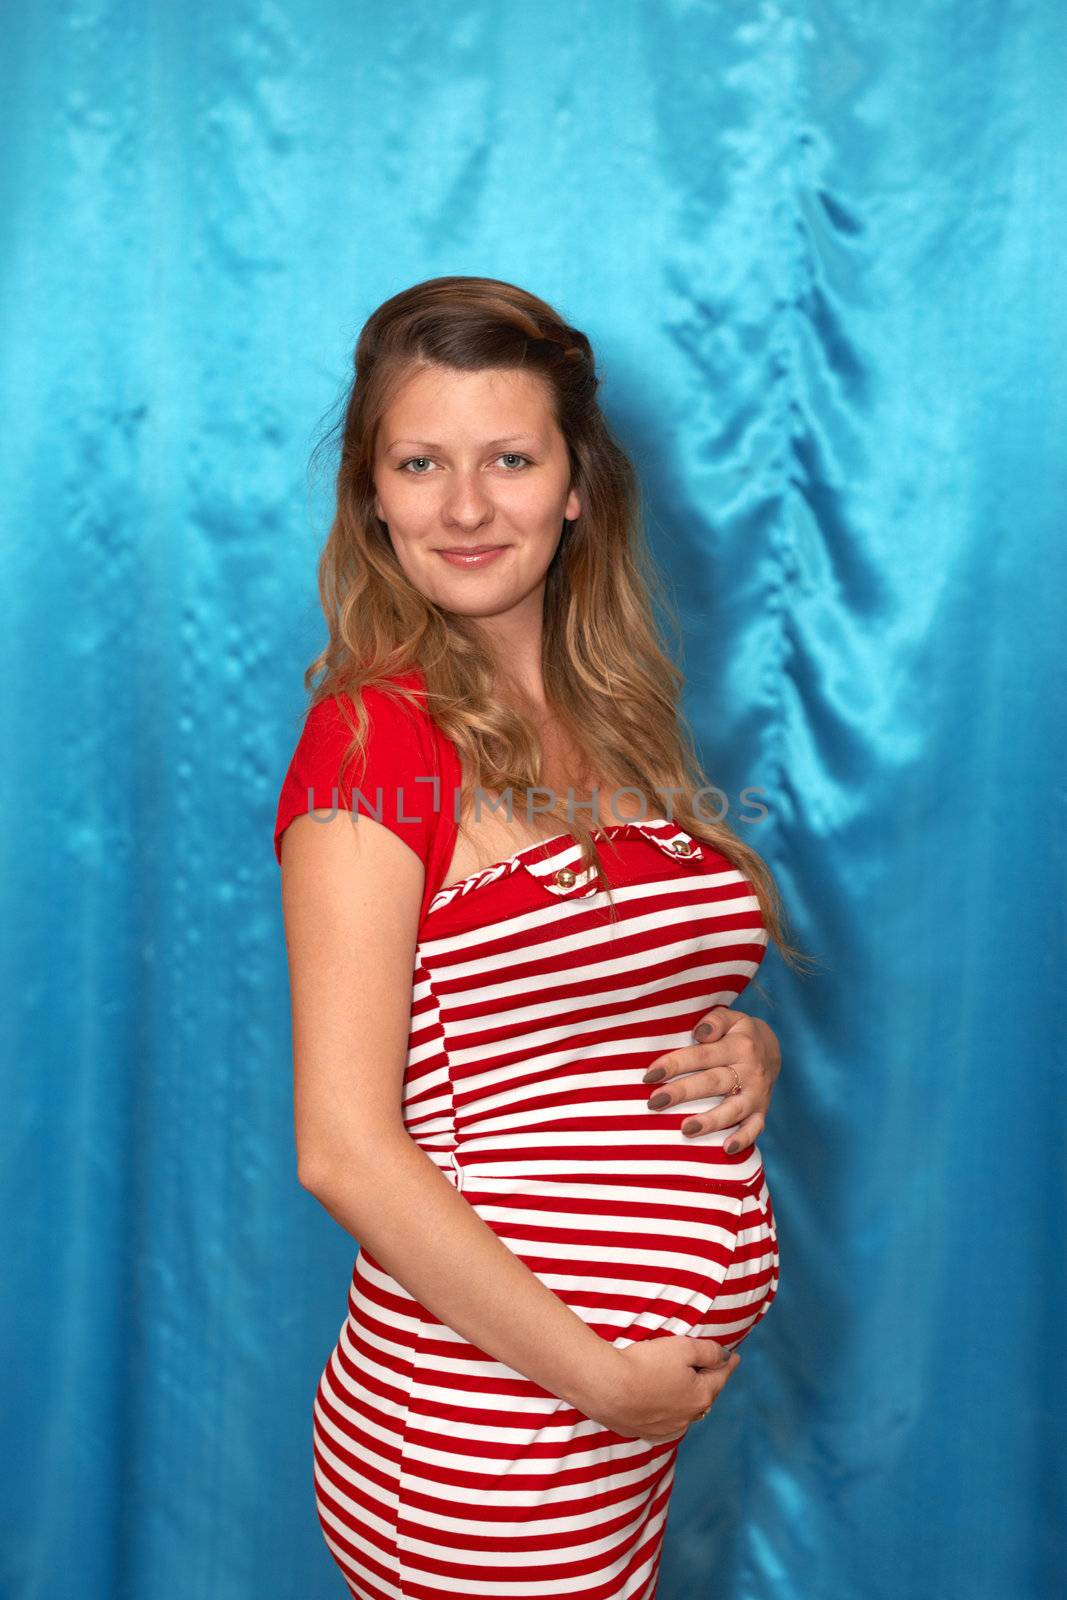 Pregnant woman by petrkurgan